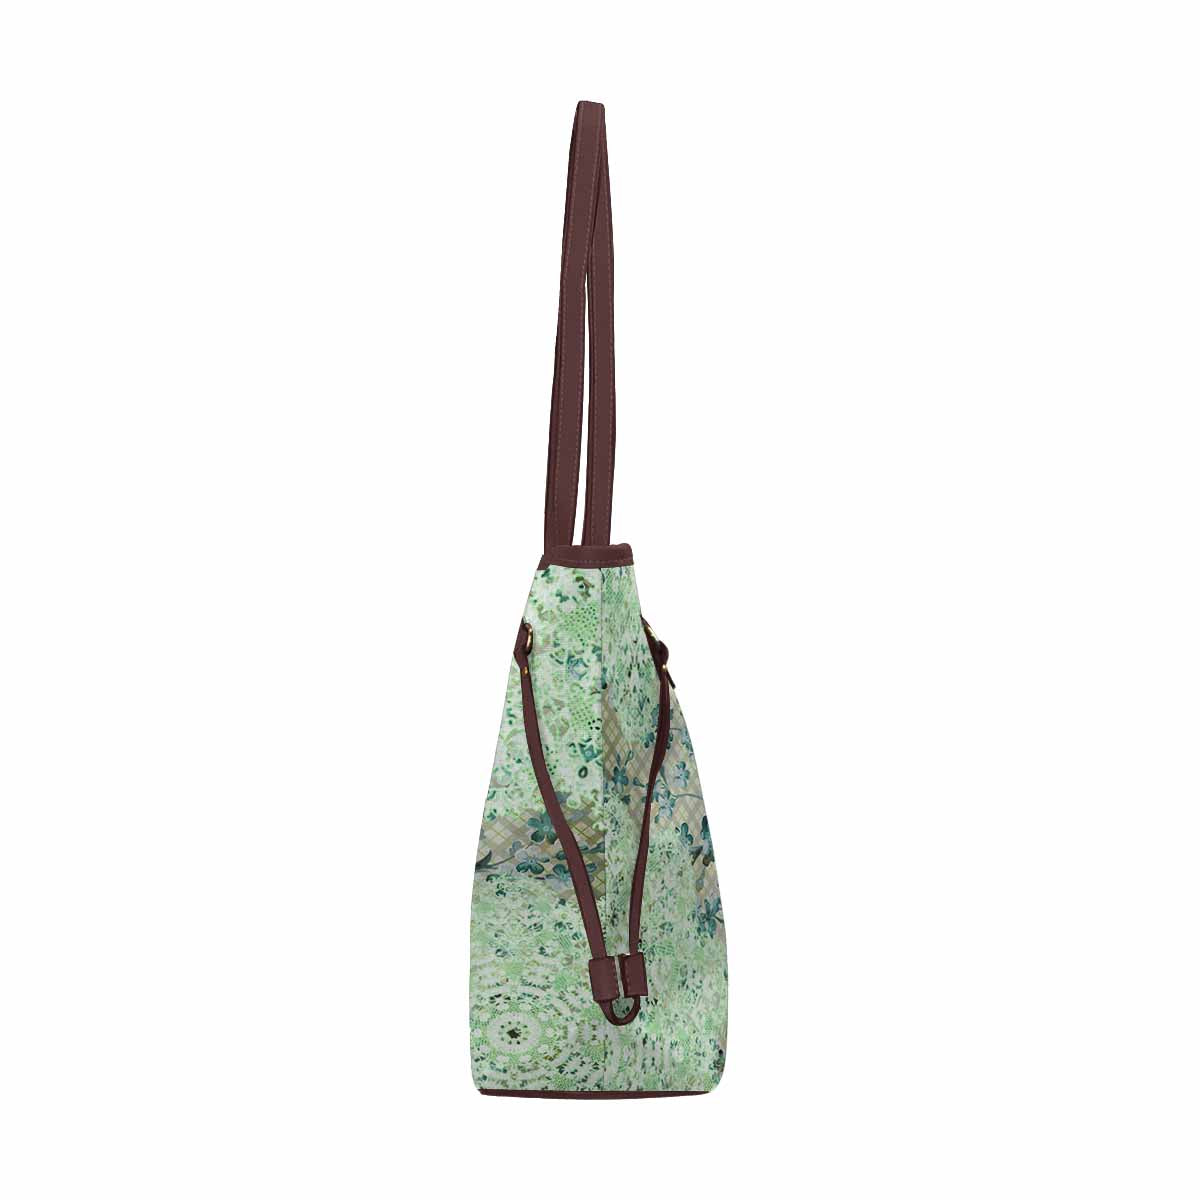 Victorian printed lace handbag, MODEL 1695361 Design 53